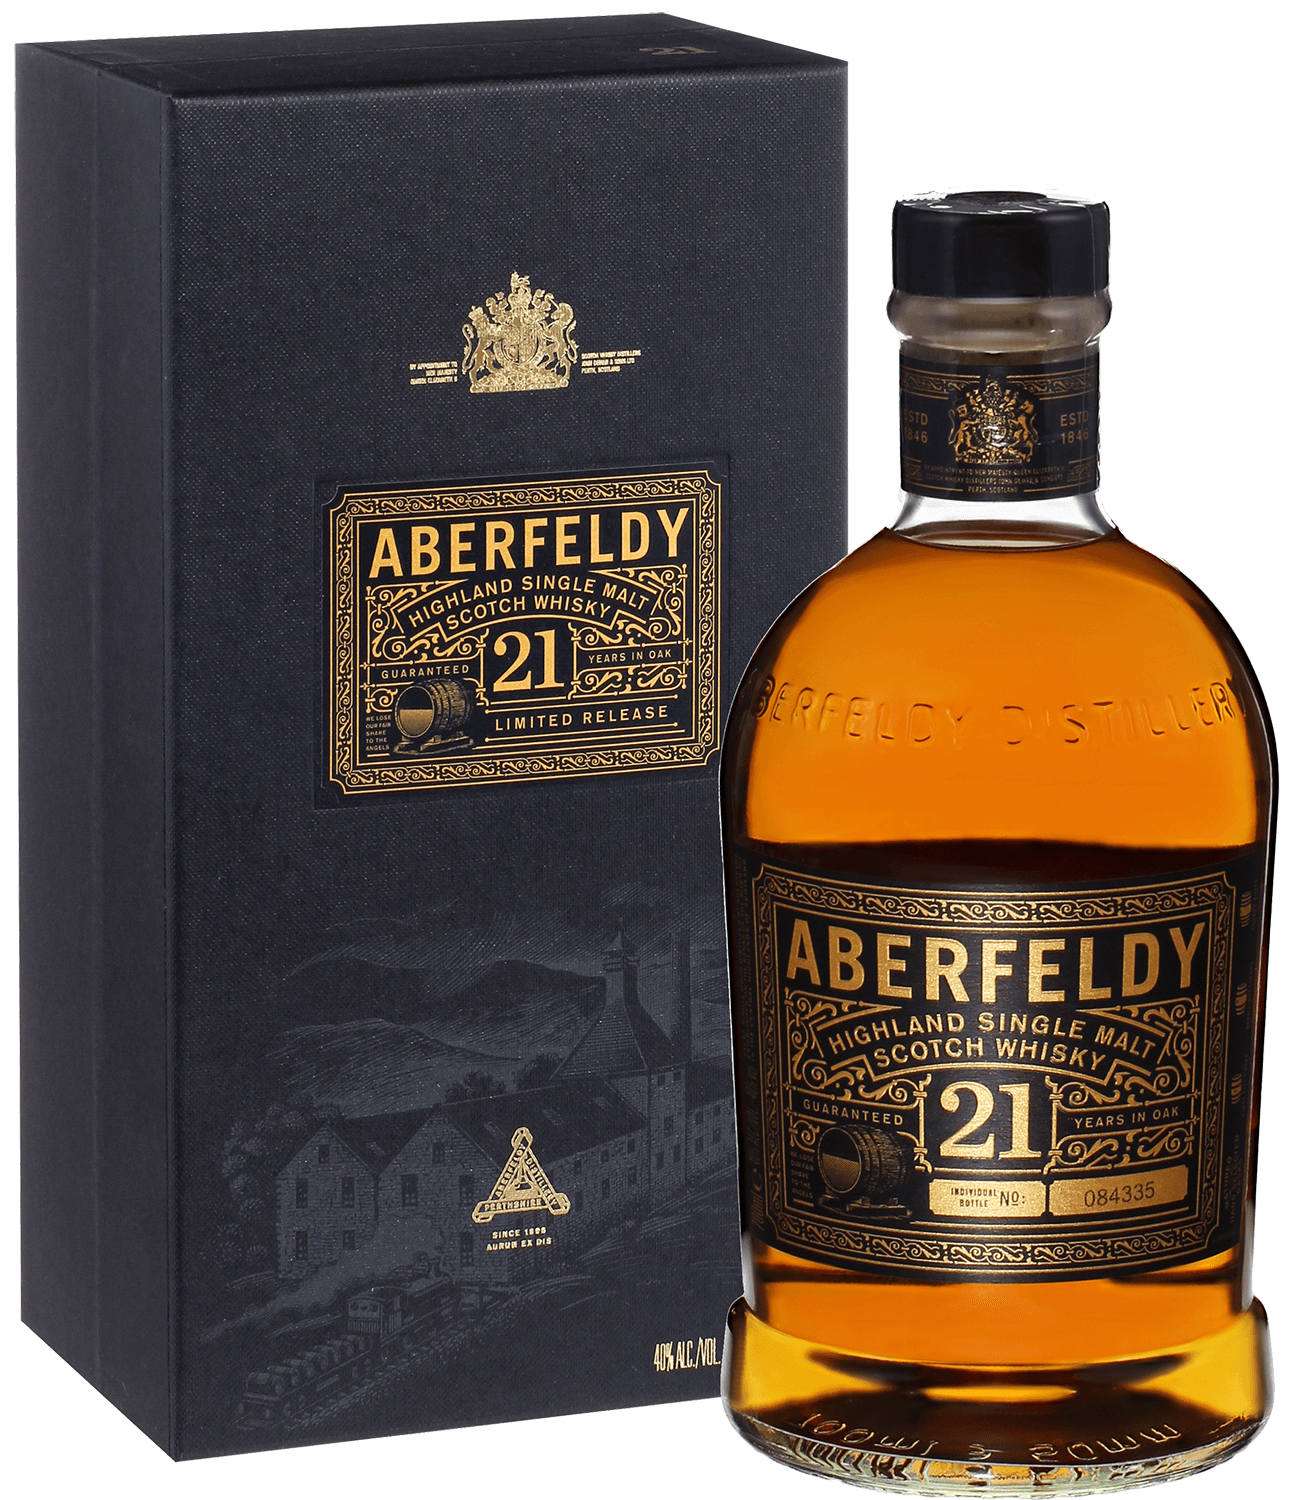 Aberfeldy 21 Years Old Highland Single Malt Scotch Whisky (gift box) glen turner 12 years old single malt scotch whisky gift box